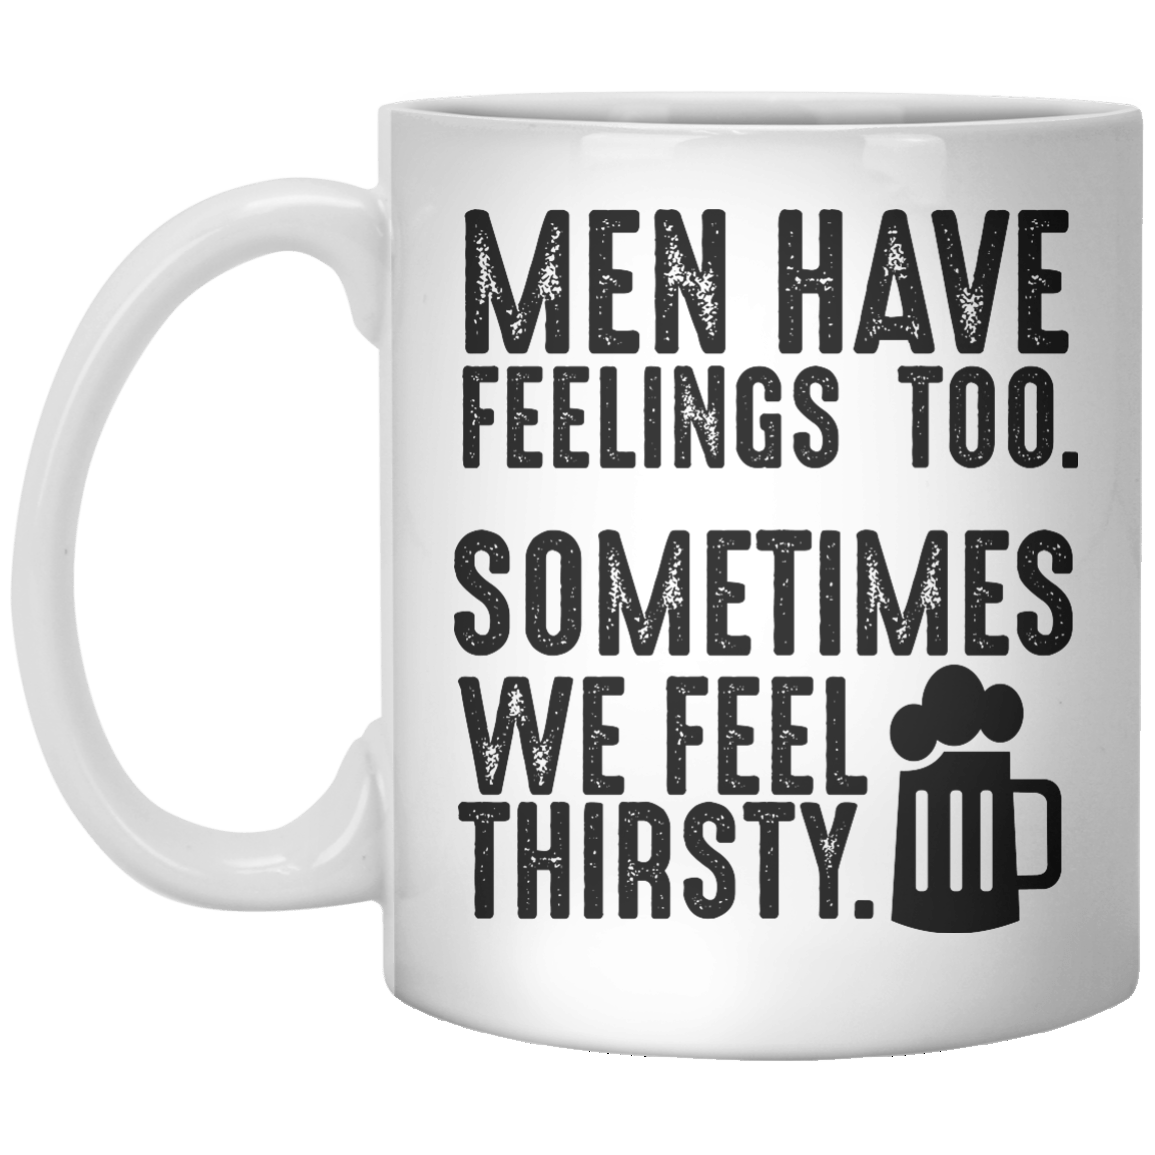 Men Have Feelings, Too. Sometimes We Feel Thirsty. - Shirtoopia